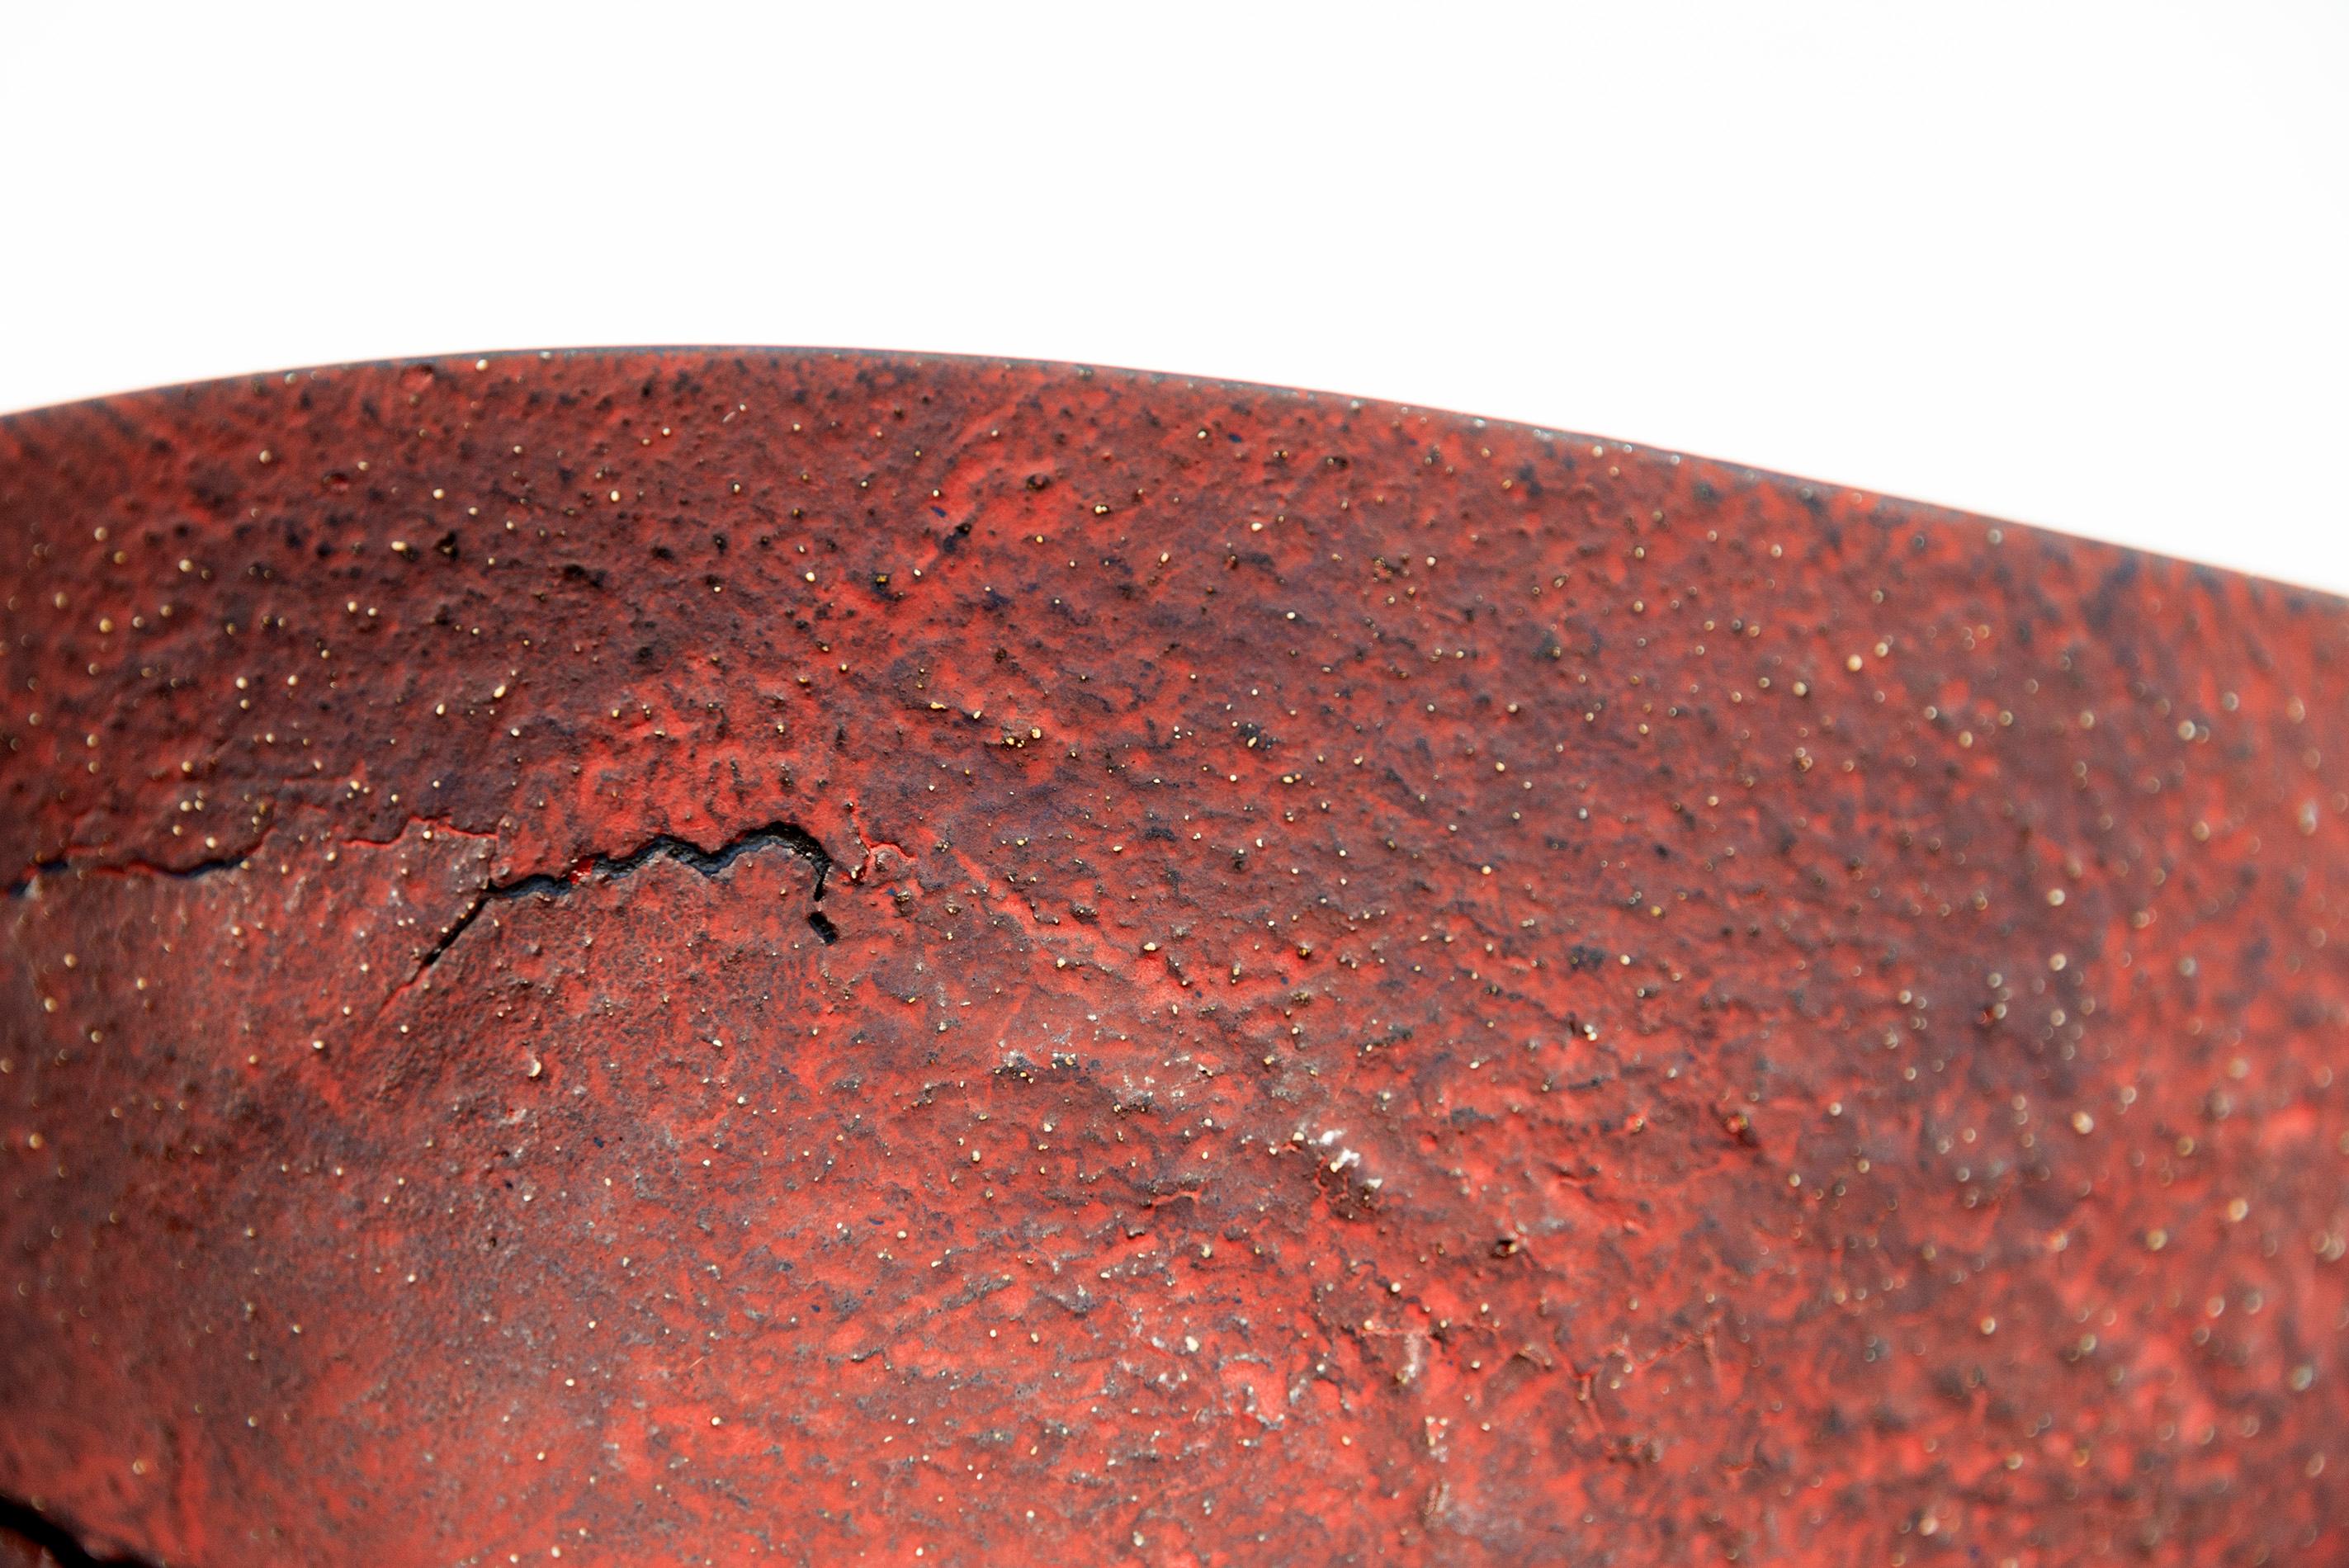 Untitled Bowl (Black) - black, red, nature inspired, textured, ceramic vessel For Sale 2